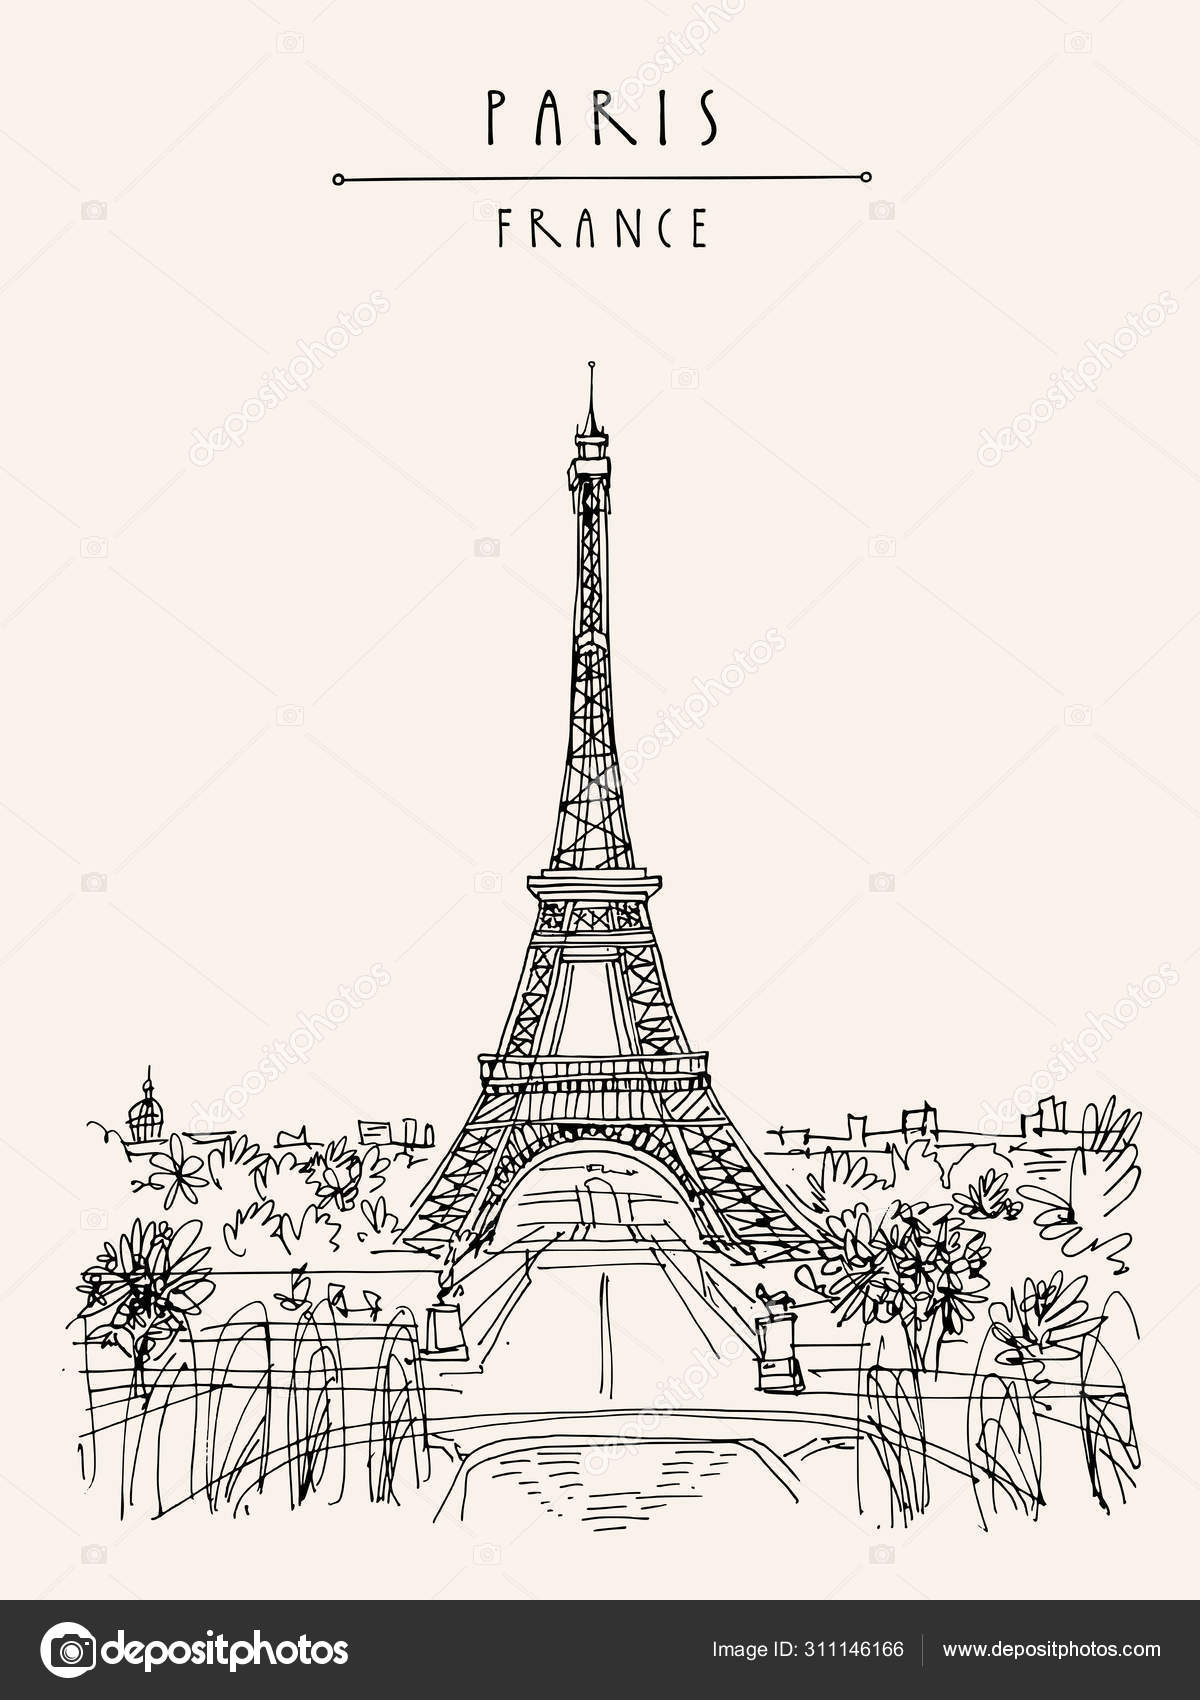 depositphotos 311146166 stock illustration paris france europe eiffel tower